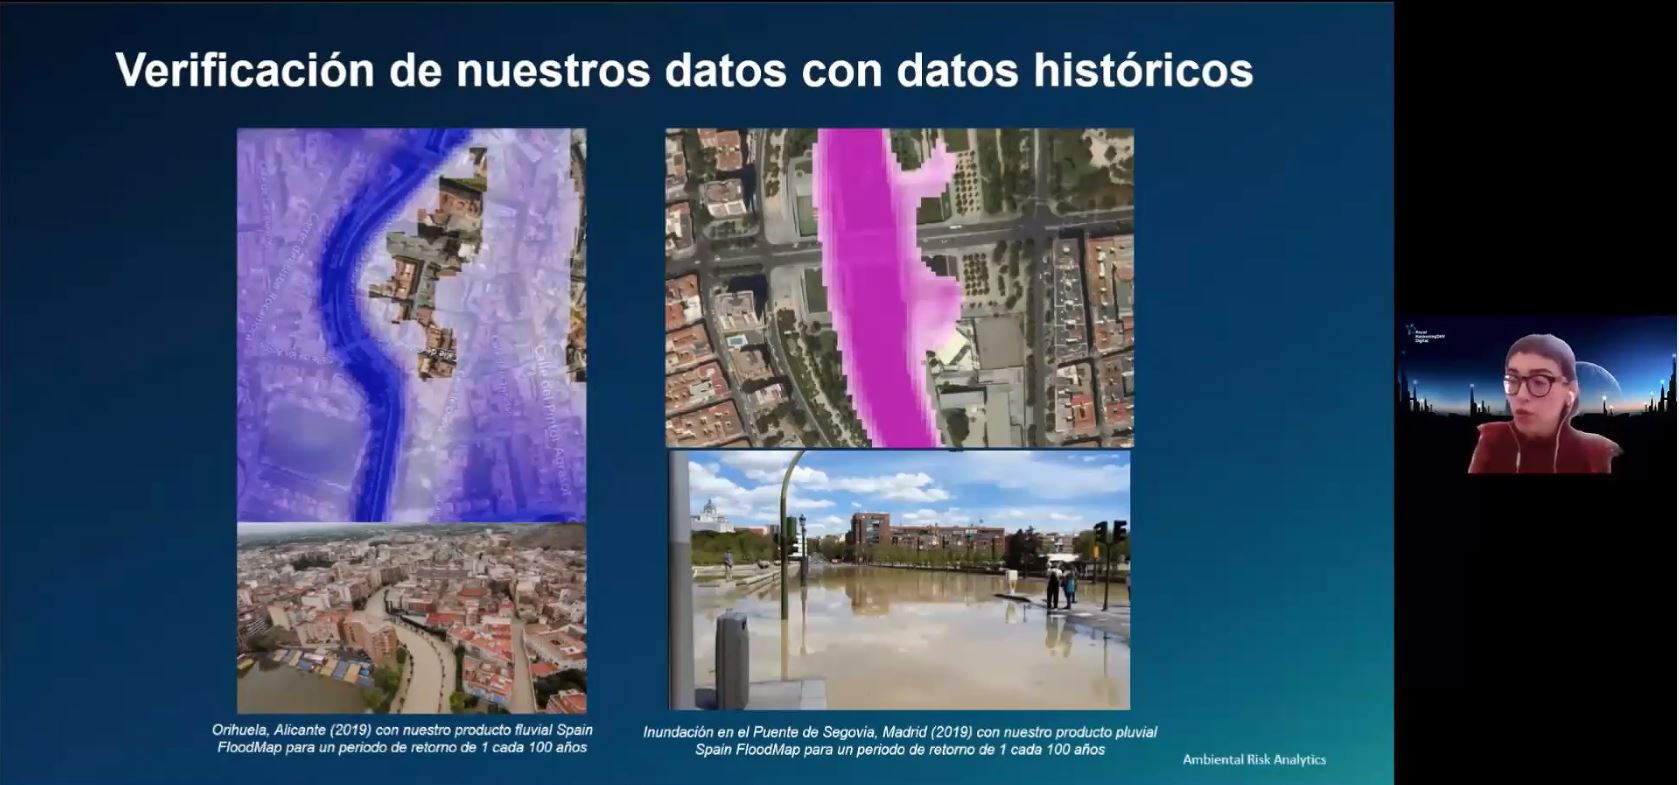 FloodScore Spain visualisation